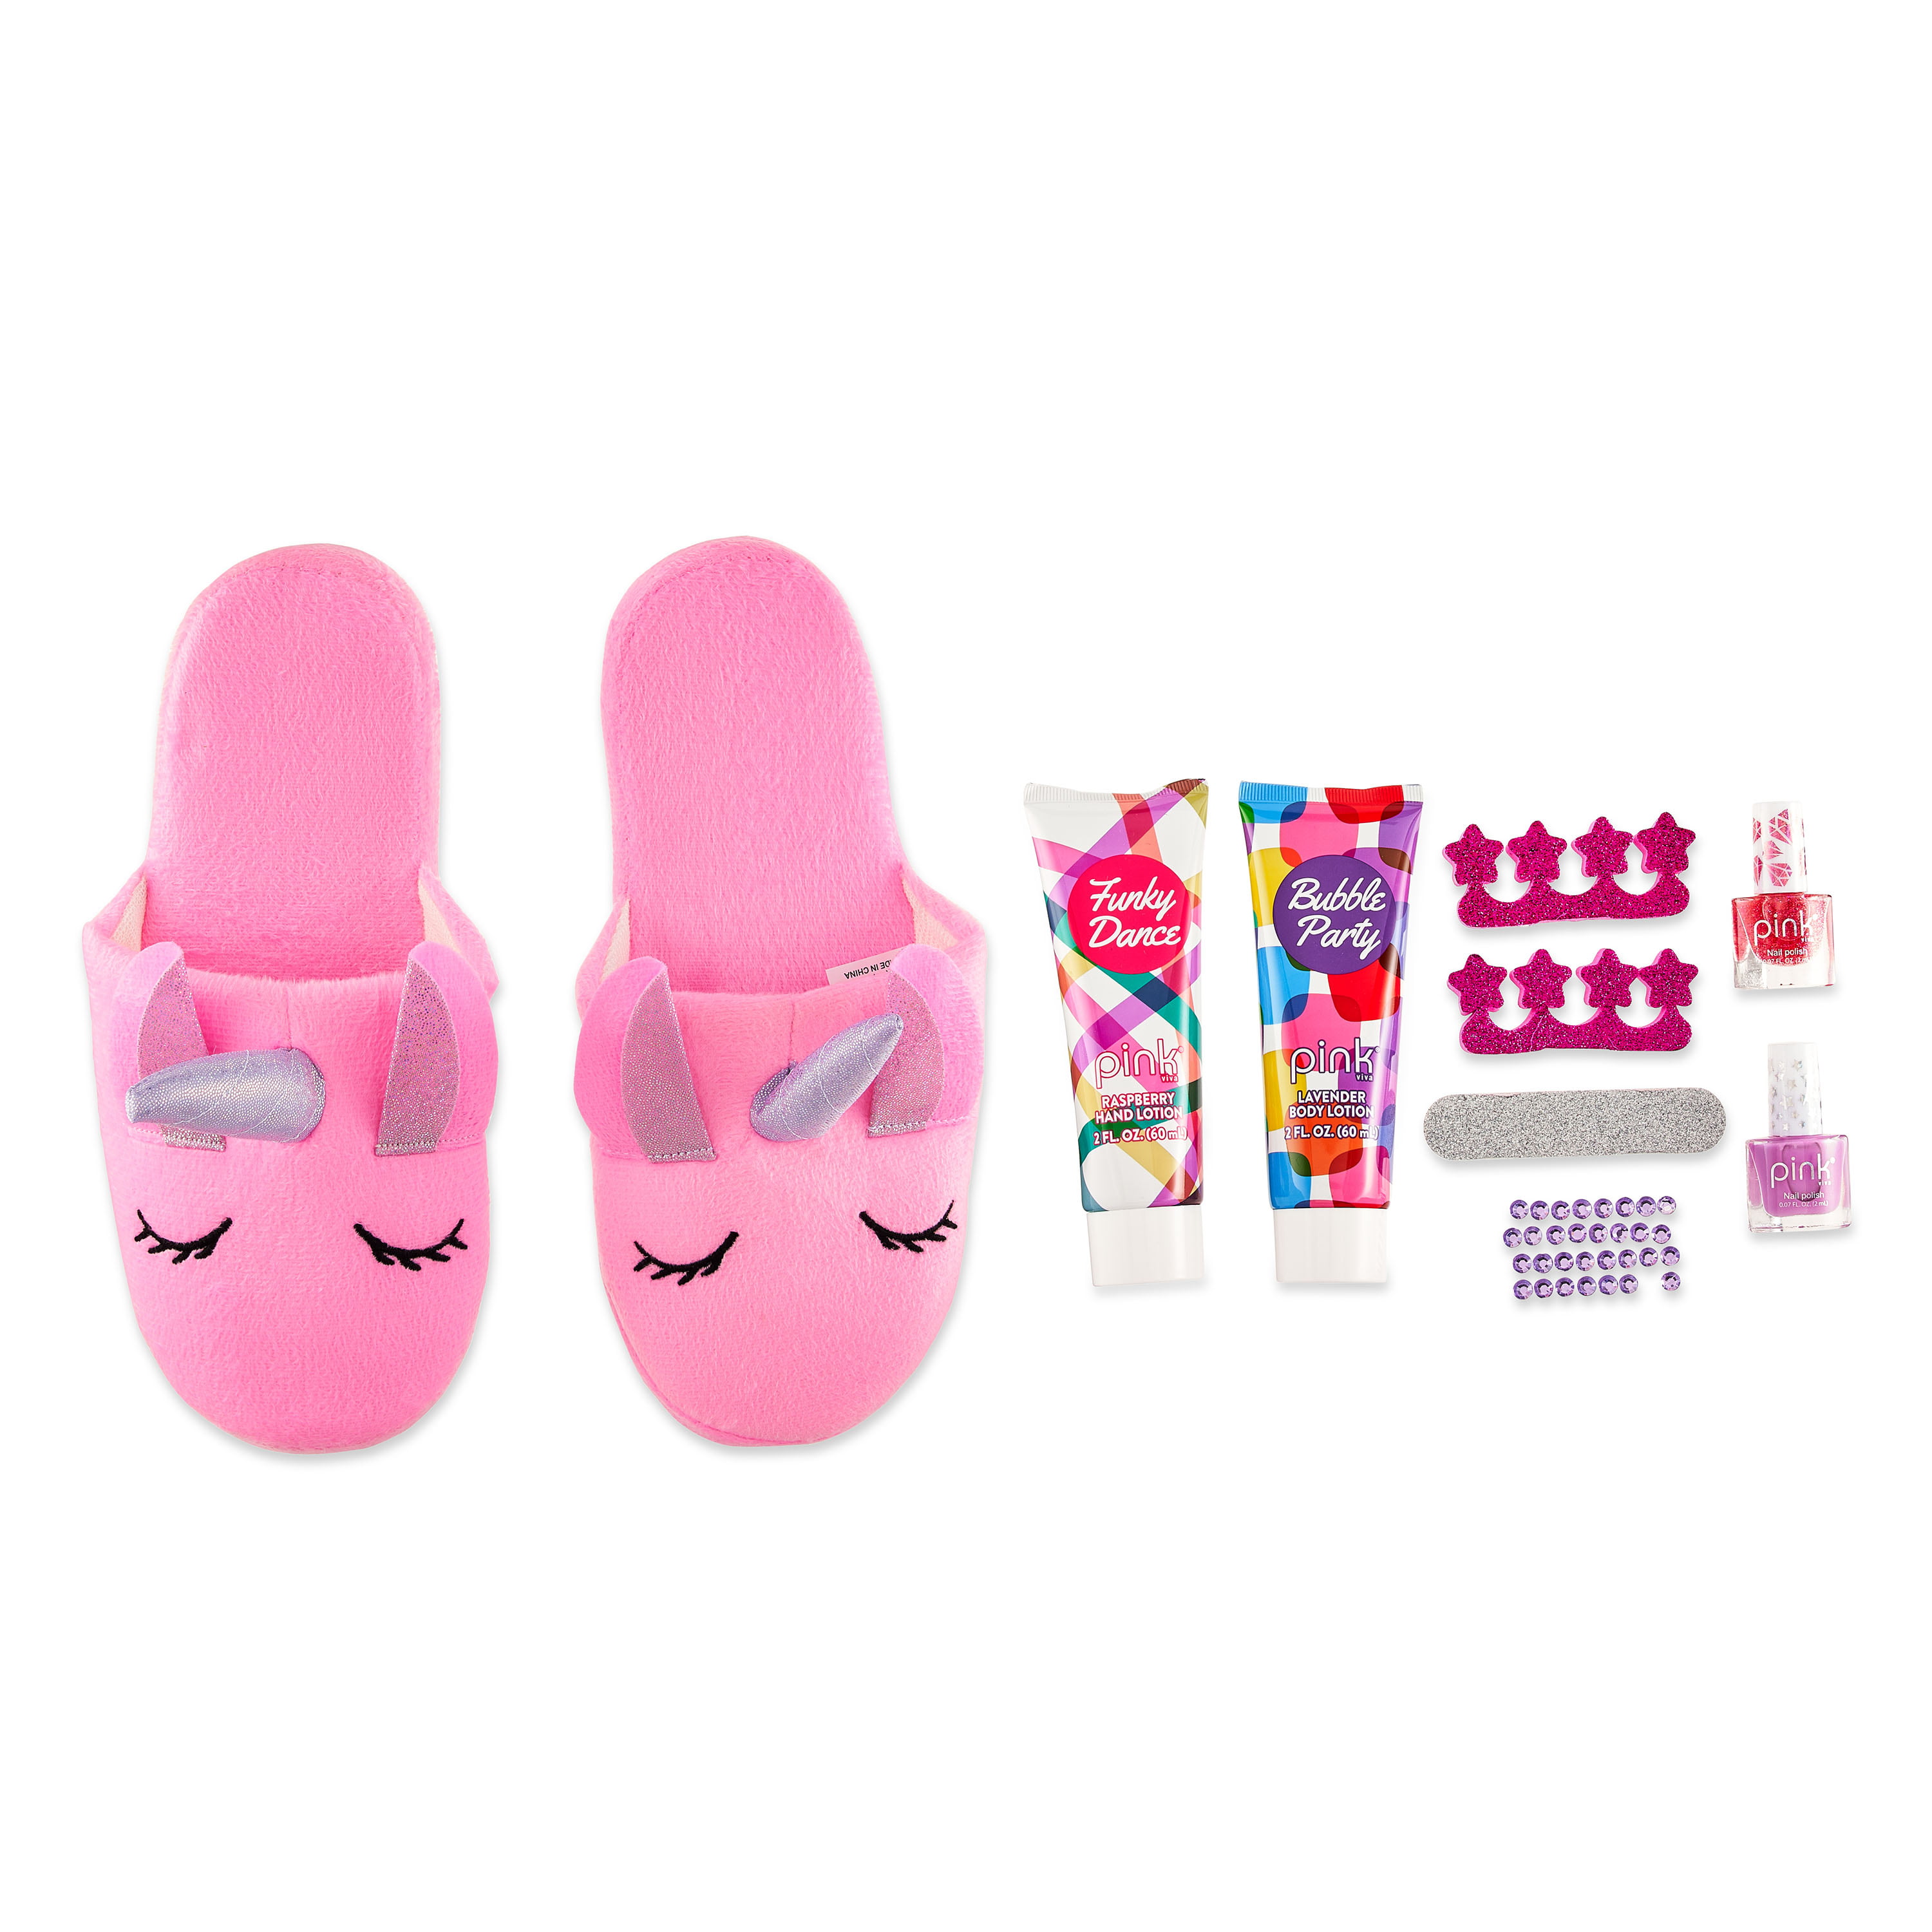 Pink Viva Bath Gift Set with Unicorn Slippers, Raspberry & Lavender, 10 Piece Set - Walmart.com